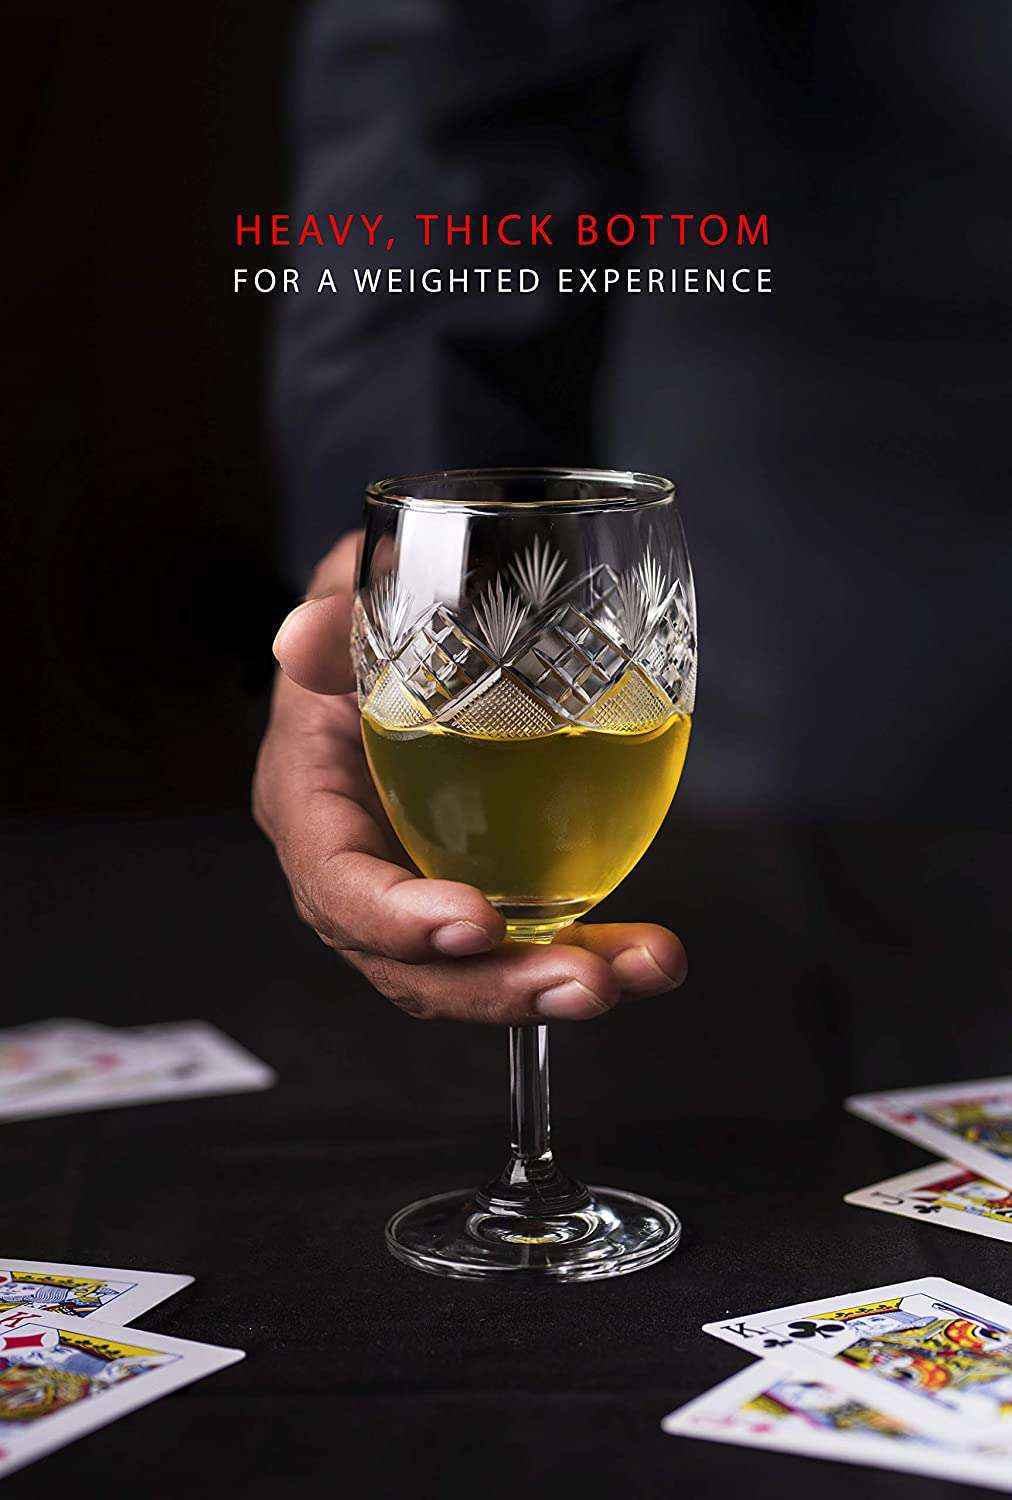 Ore Design Crystal Wine Glasses